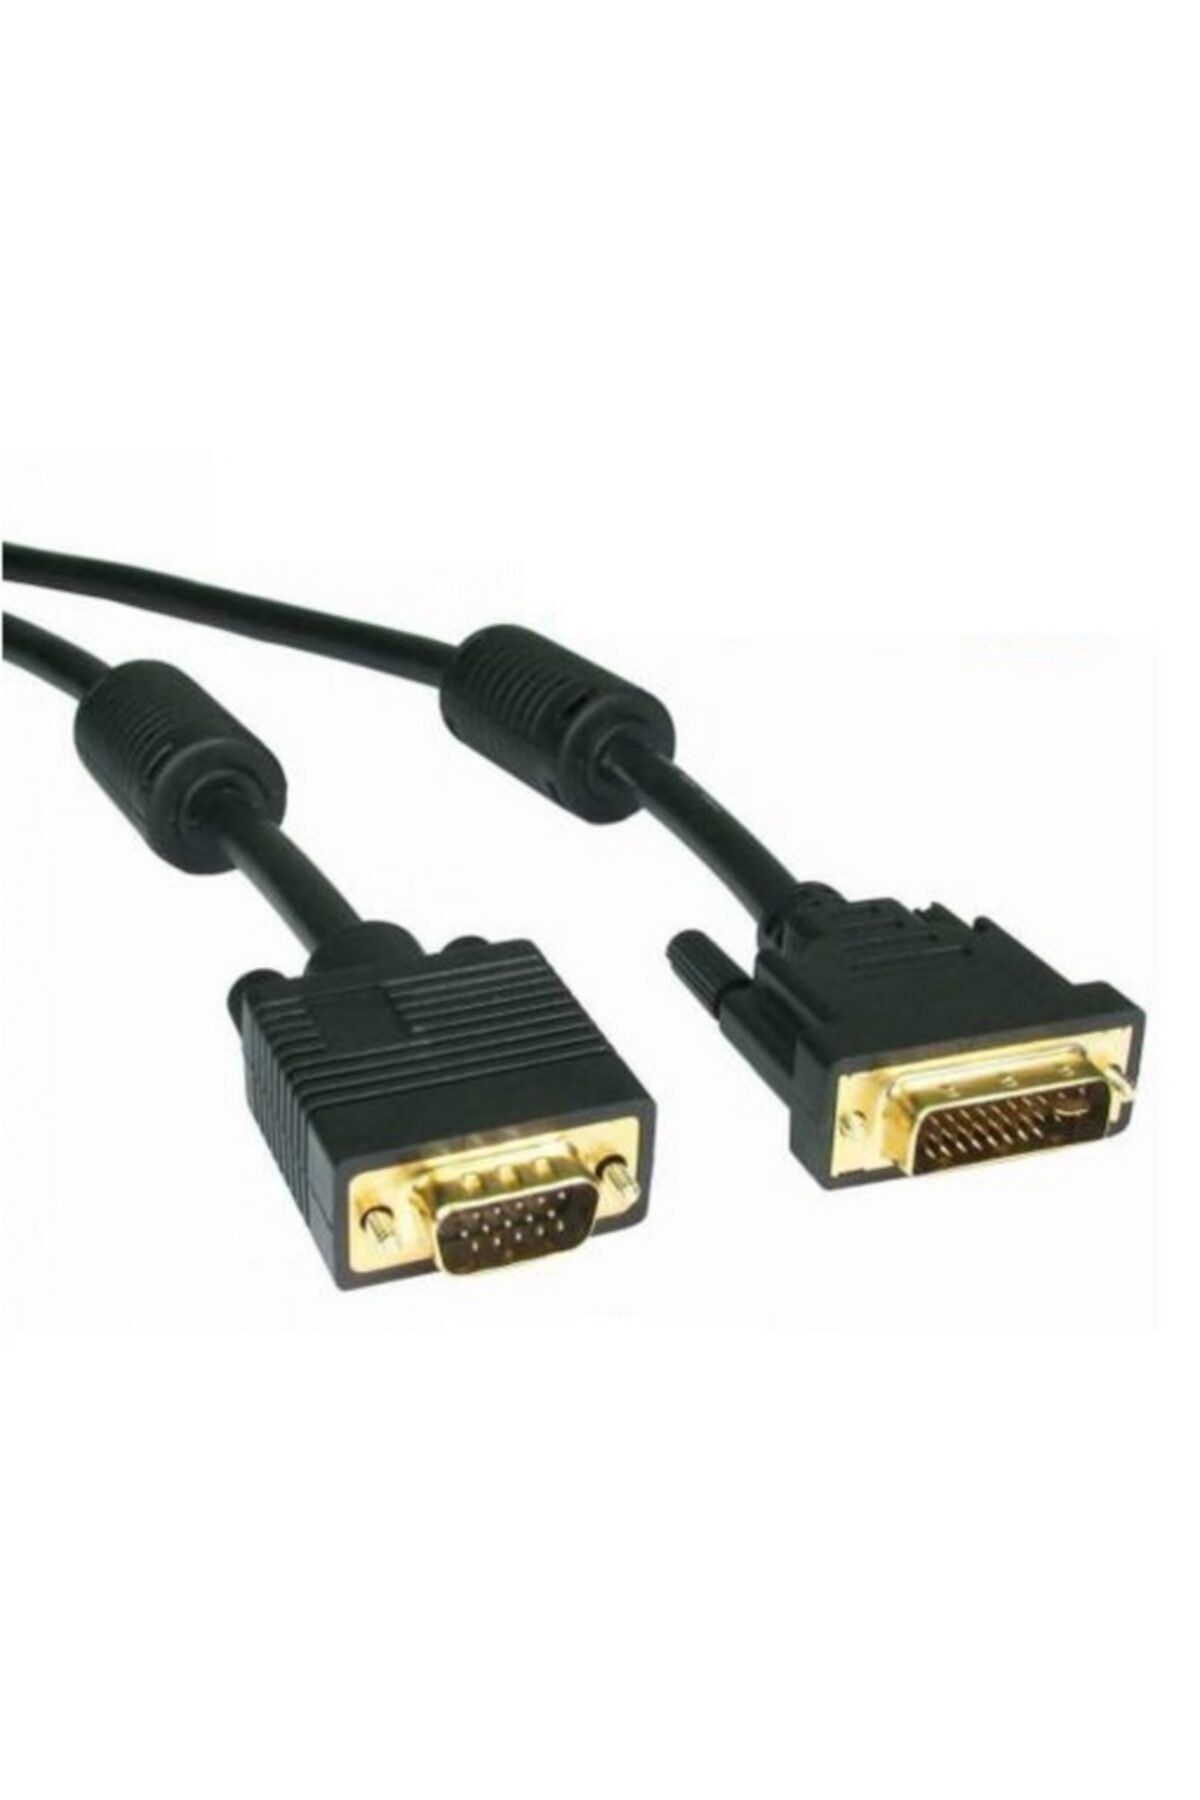 Alfais 4255 Dvi 24 + 5 Vga Çevirici Dönüştürücü Monitör Kablosu Dvı-ı Dual Link